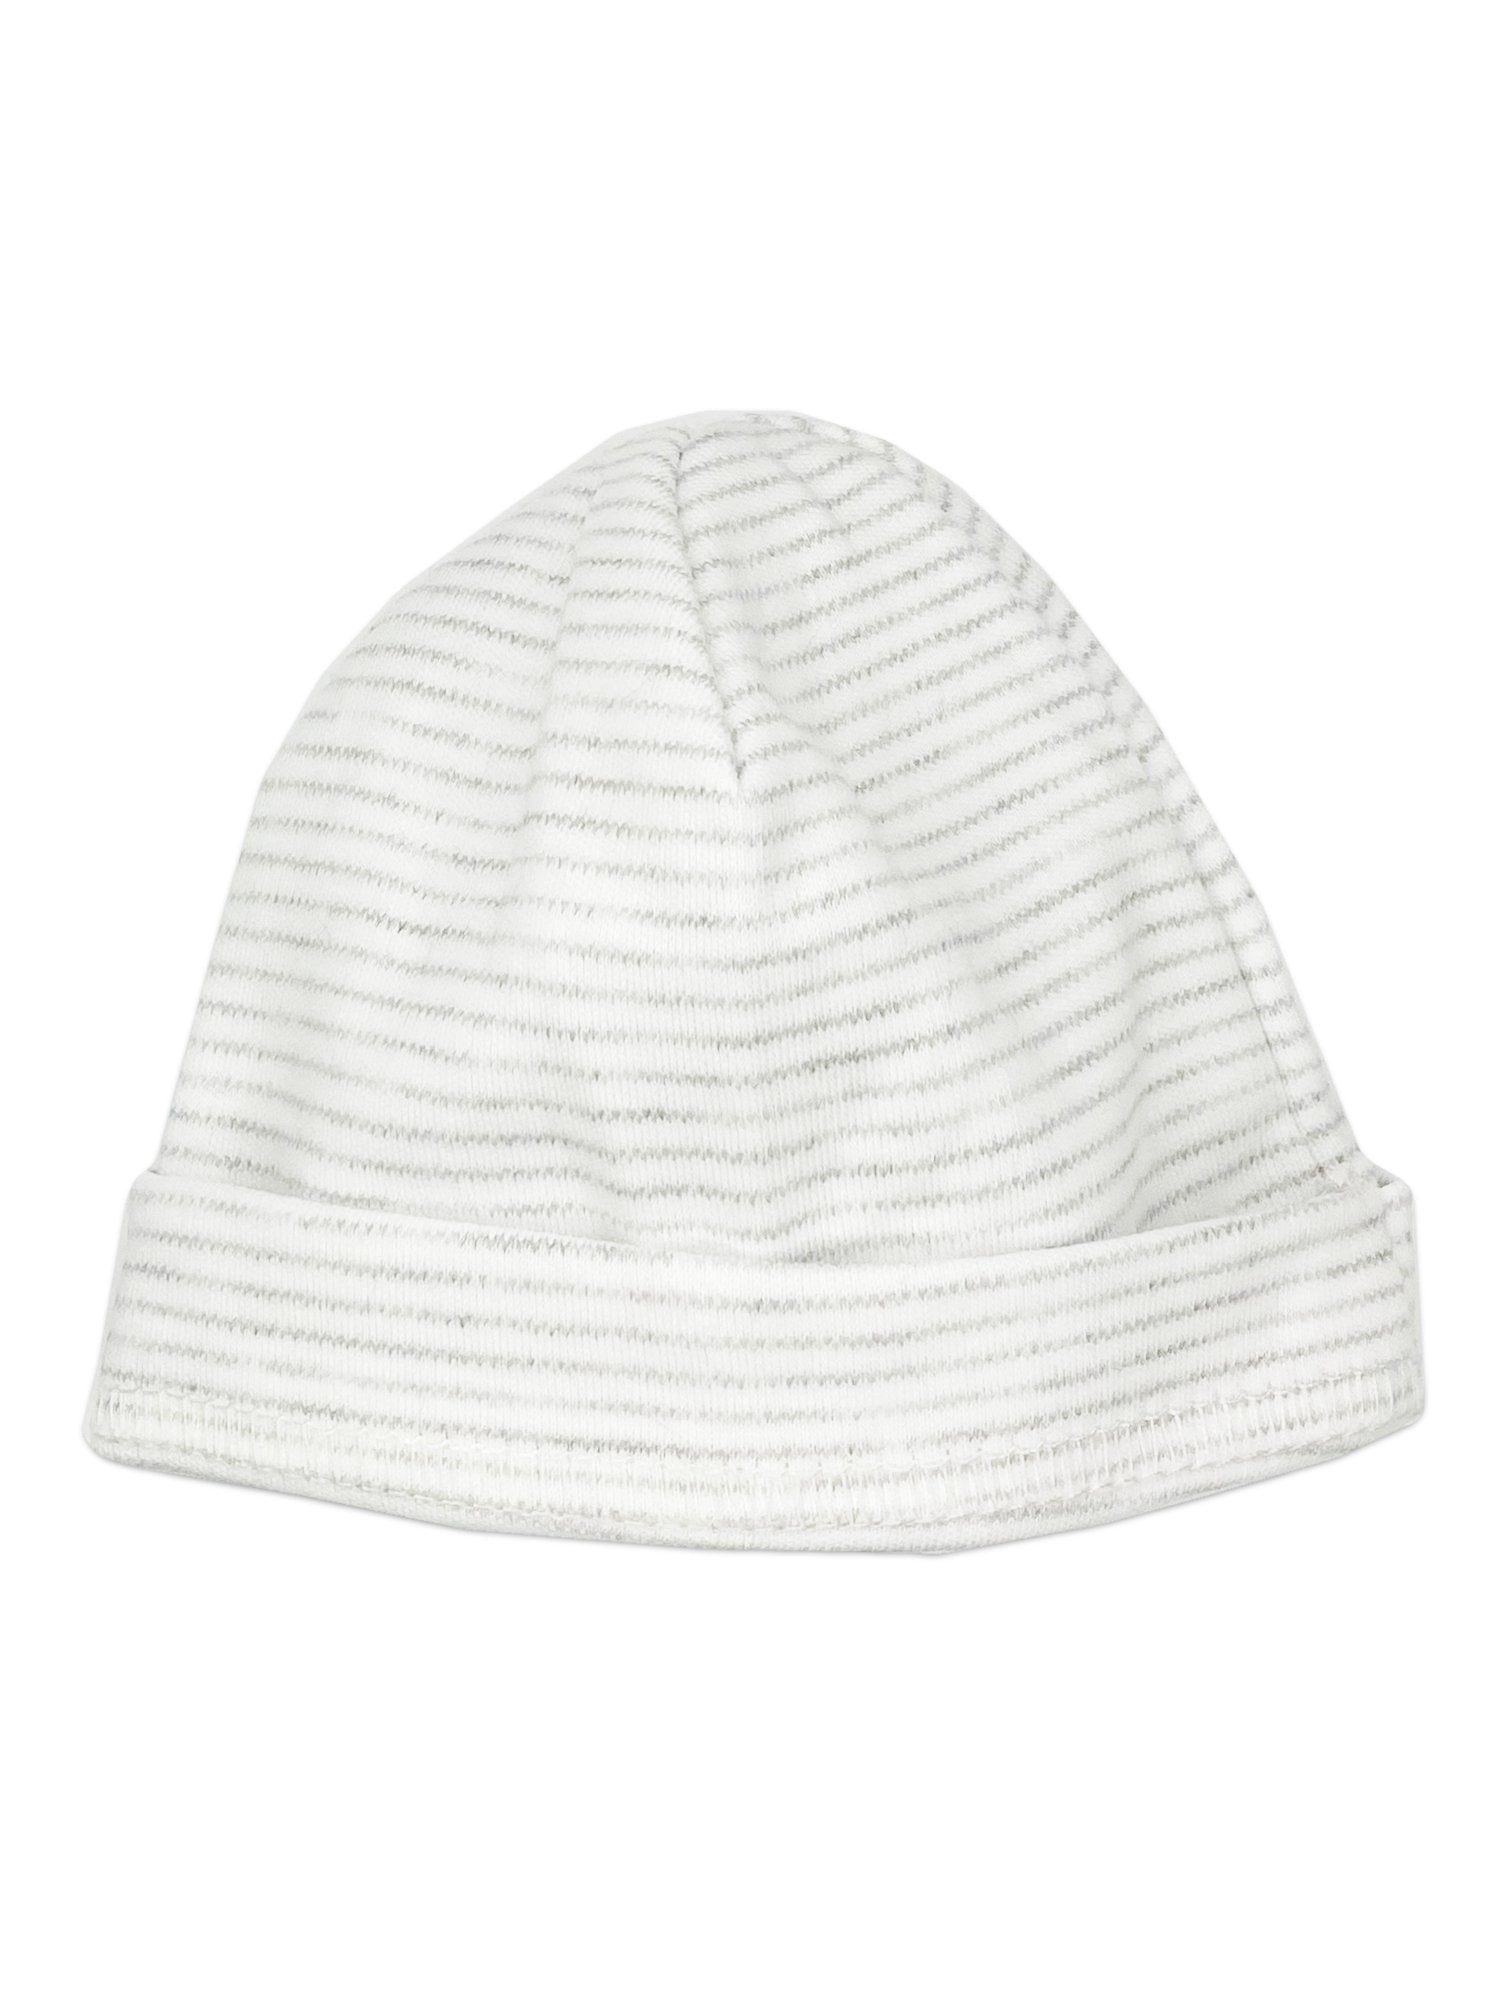 Premature Baby Hat - Grey Stripe - Hat - Lorita